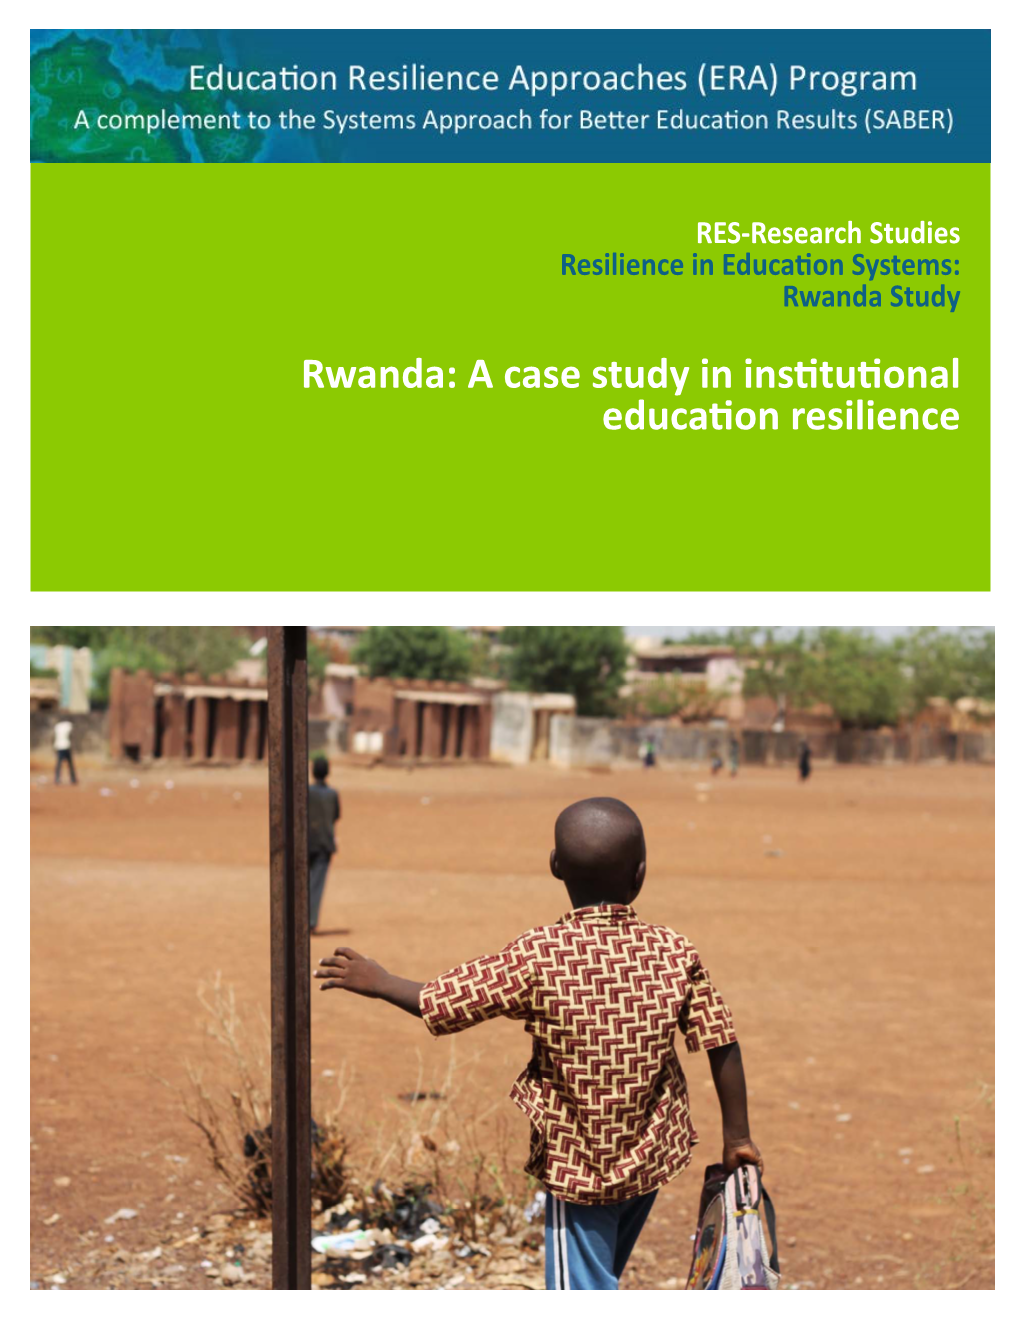 Rwanda Study Rwanda: a Case Study in Institutional Education Resilience